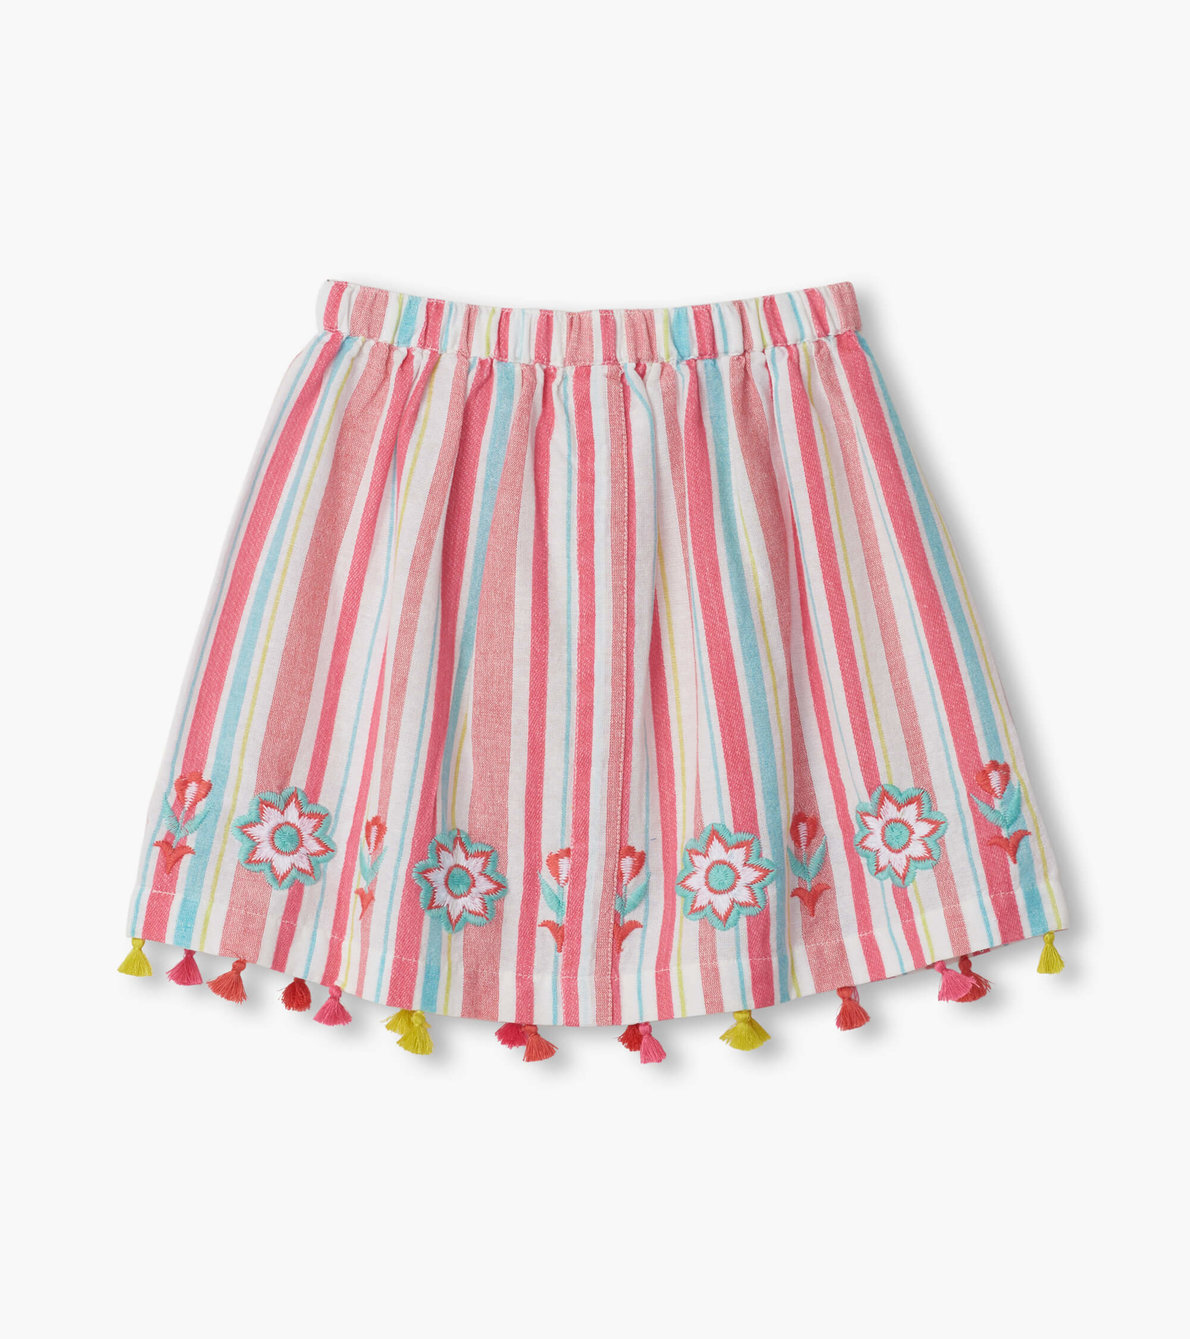 View larger image of Pink Lemonade Tassel Skirt